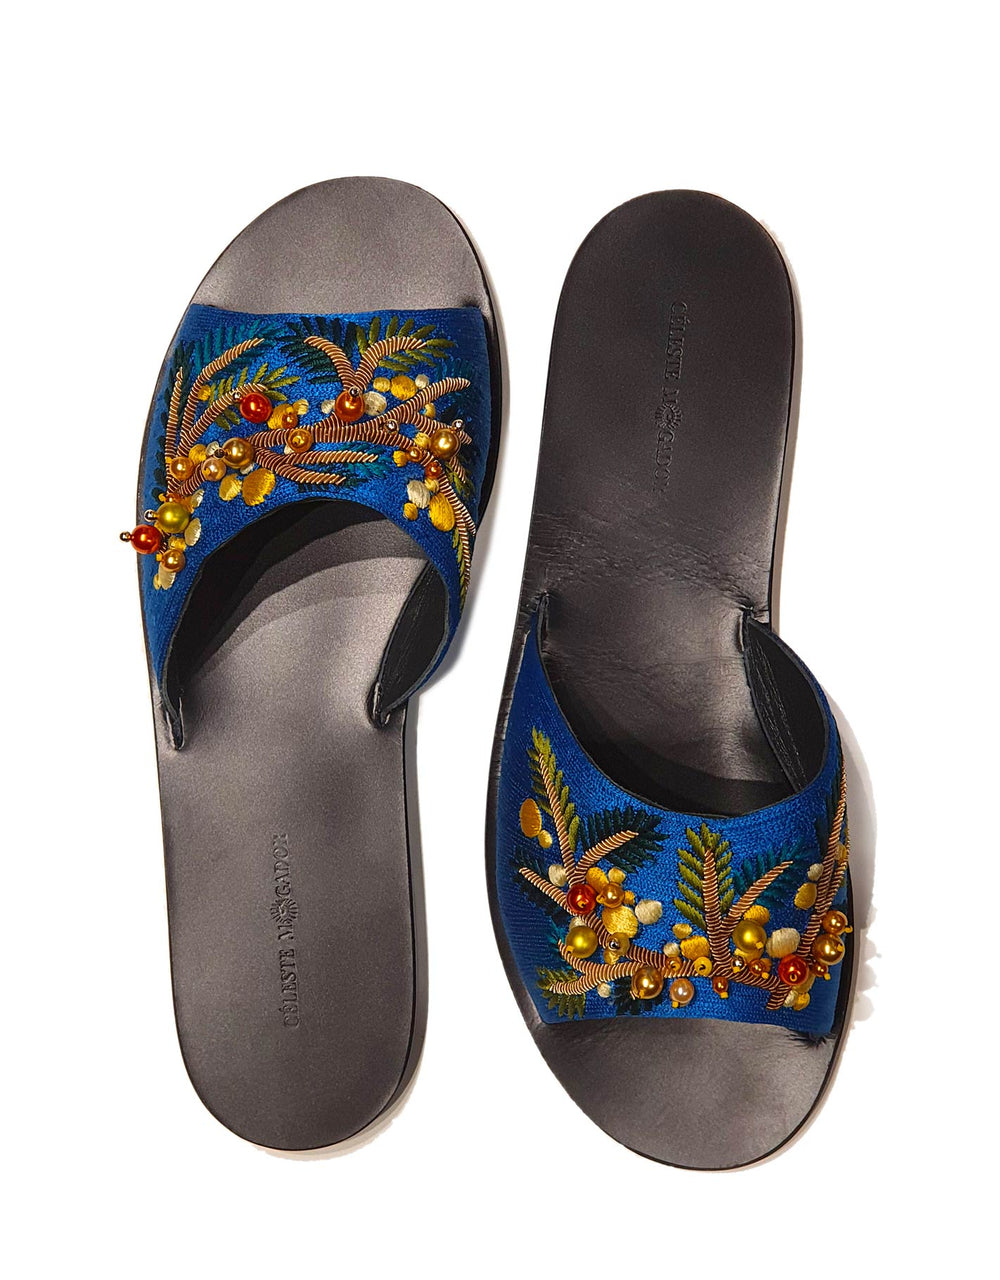 "Mimosa" sandals